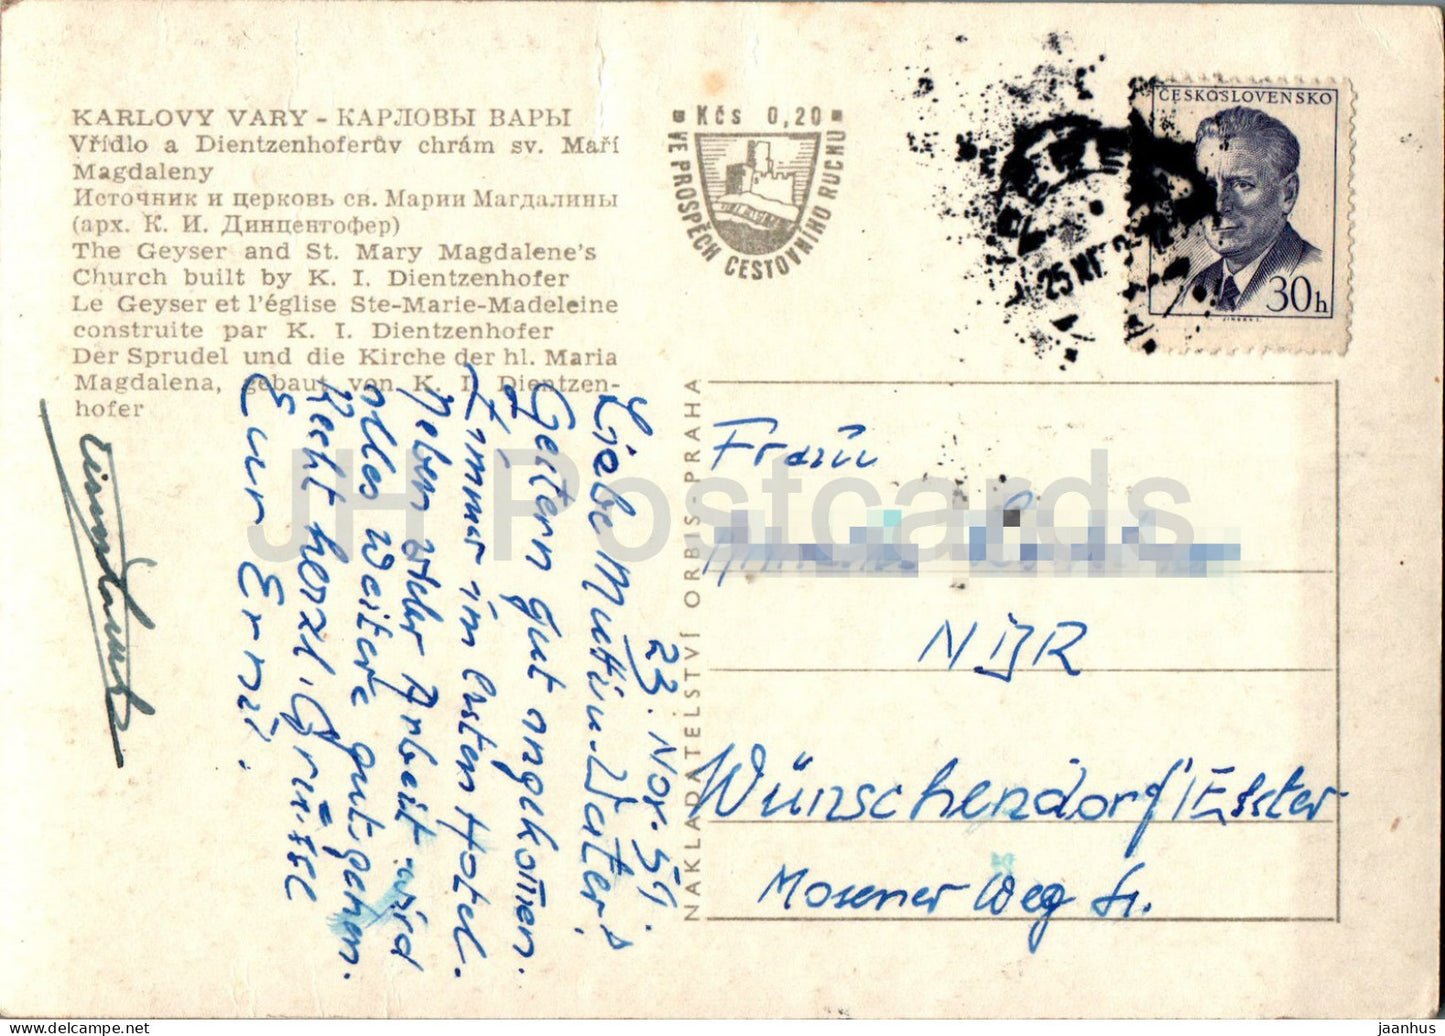 Karlovy Vary - The Geyser and St Mary Magdalene's Church - old postcard - 1959 - Czech Republic - Czechoslovakia - used